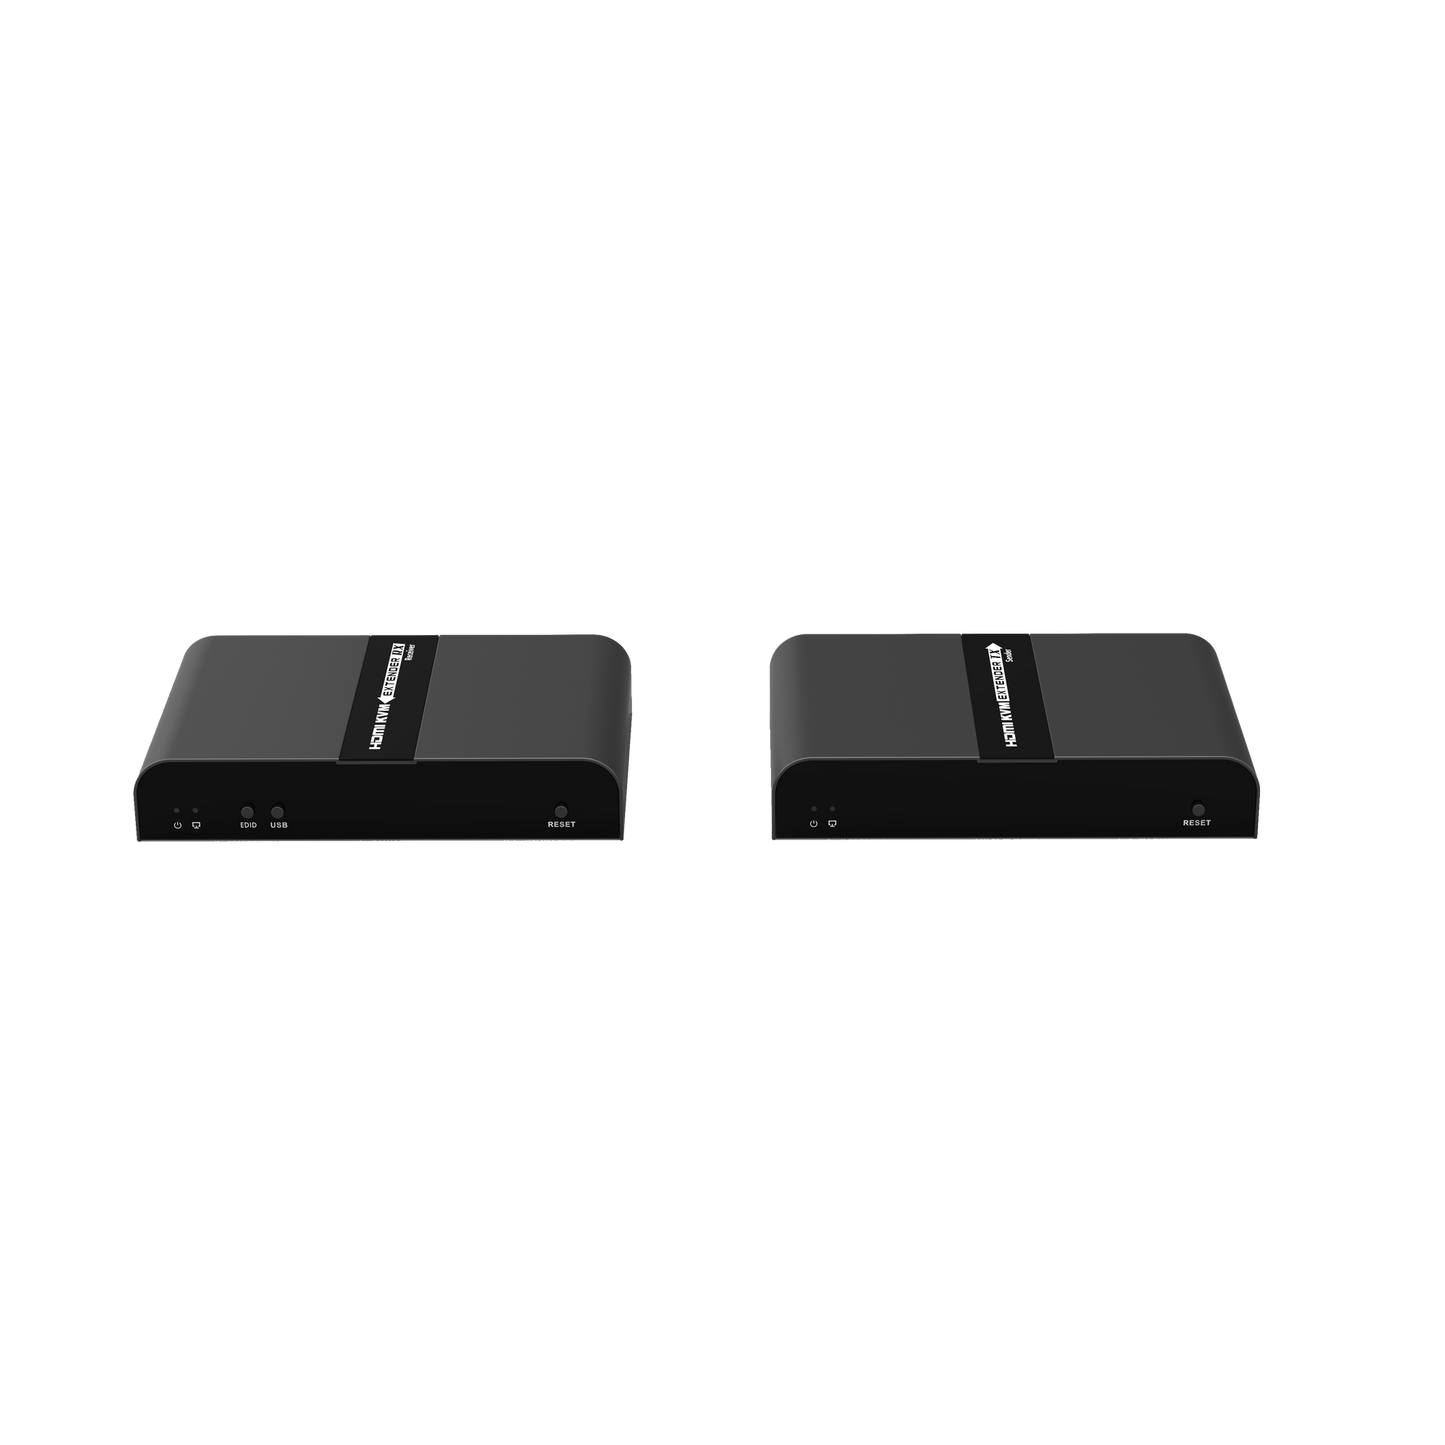 Kit extensor KVM (HDMI y USB 2.0) hasta 100 metros / Resolución 4K @ 60 Hz / Cat 6/6A/7 / CERO LATENCIA / Salida Loop / Soporta Switch Gigabit para control KVM múltiple / Soporta hasta 253